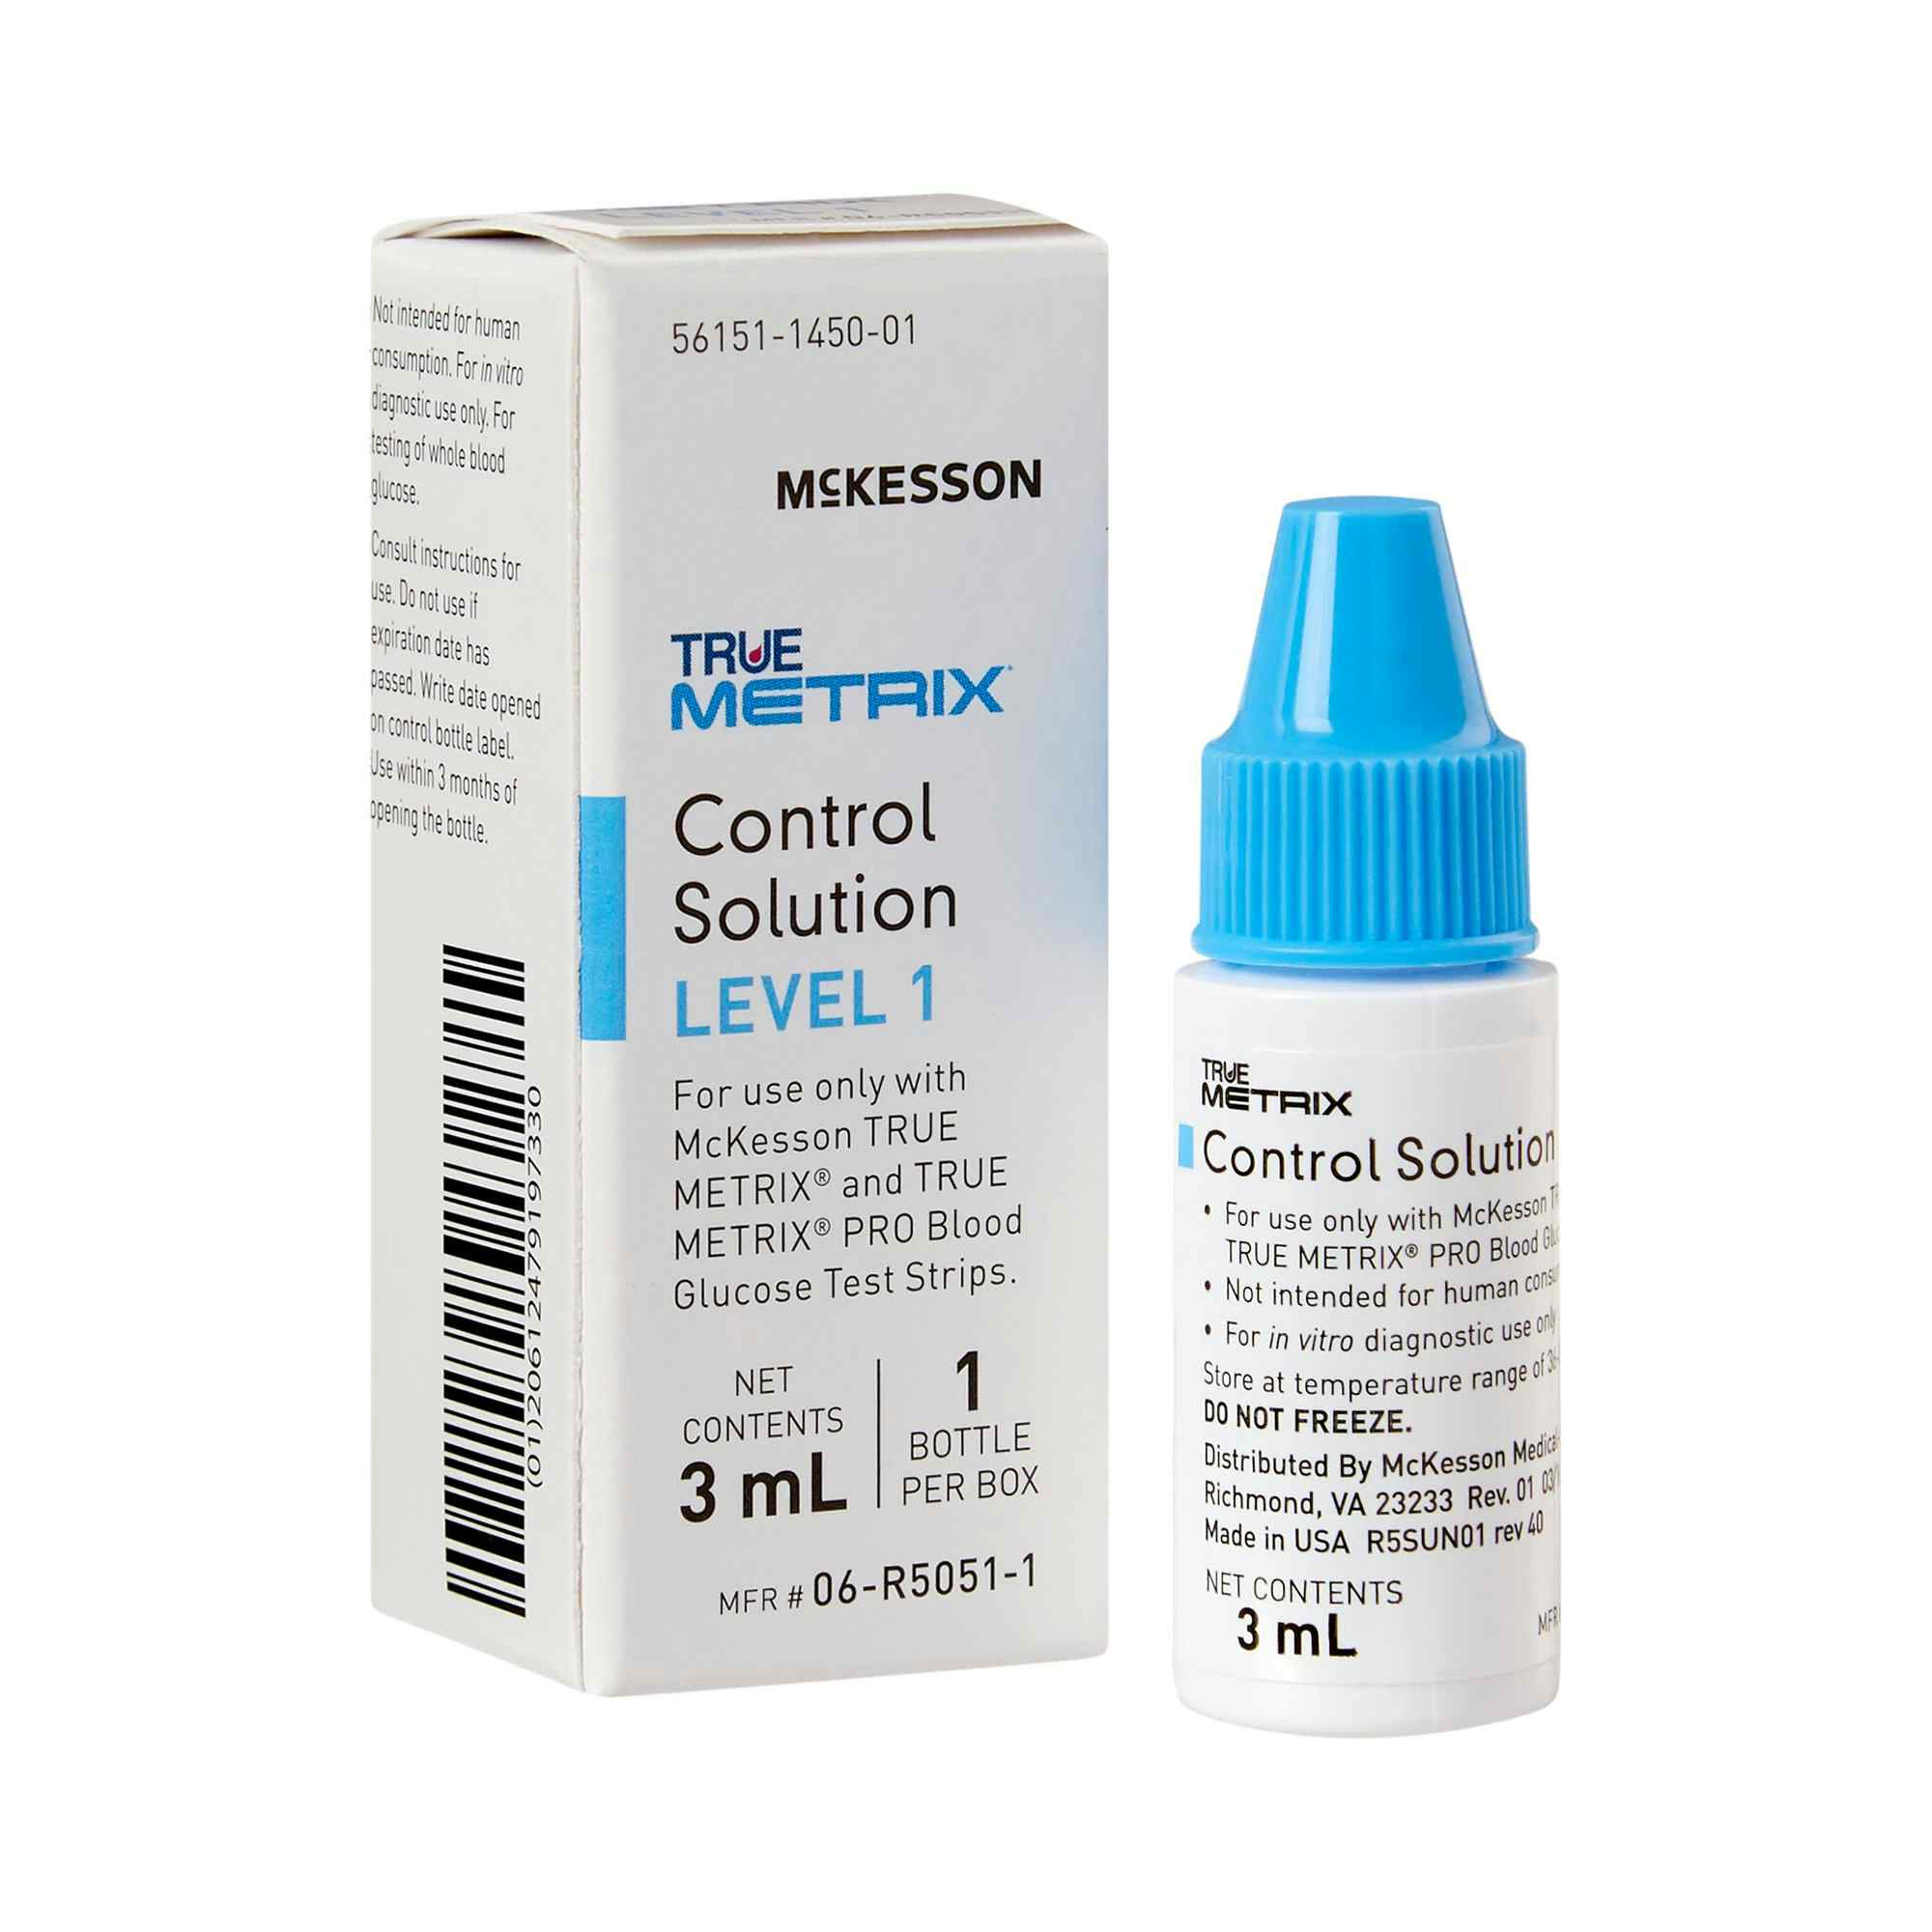 McKesson TRUE METRIX Control Solution, 3 mL Level 1, 06-R5051-1, Case of 24